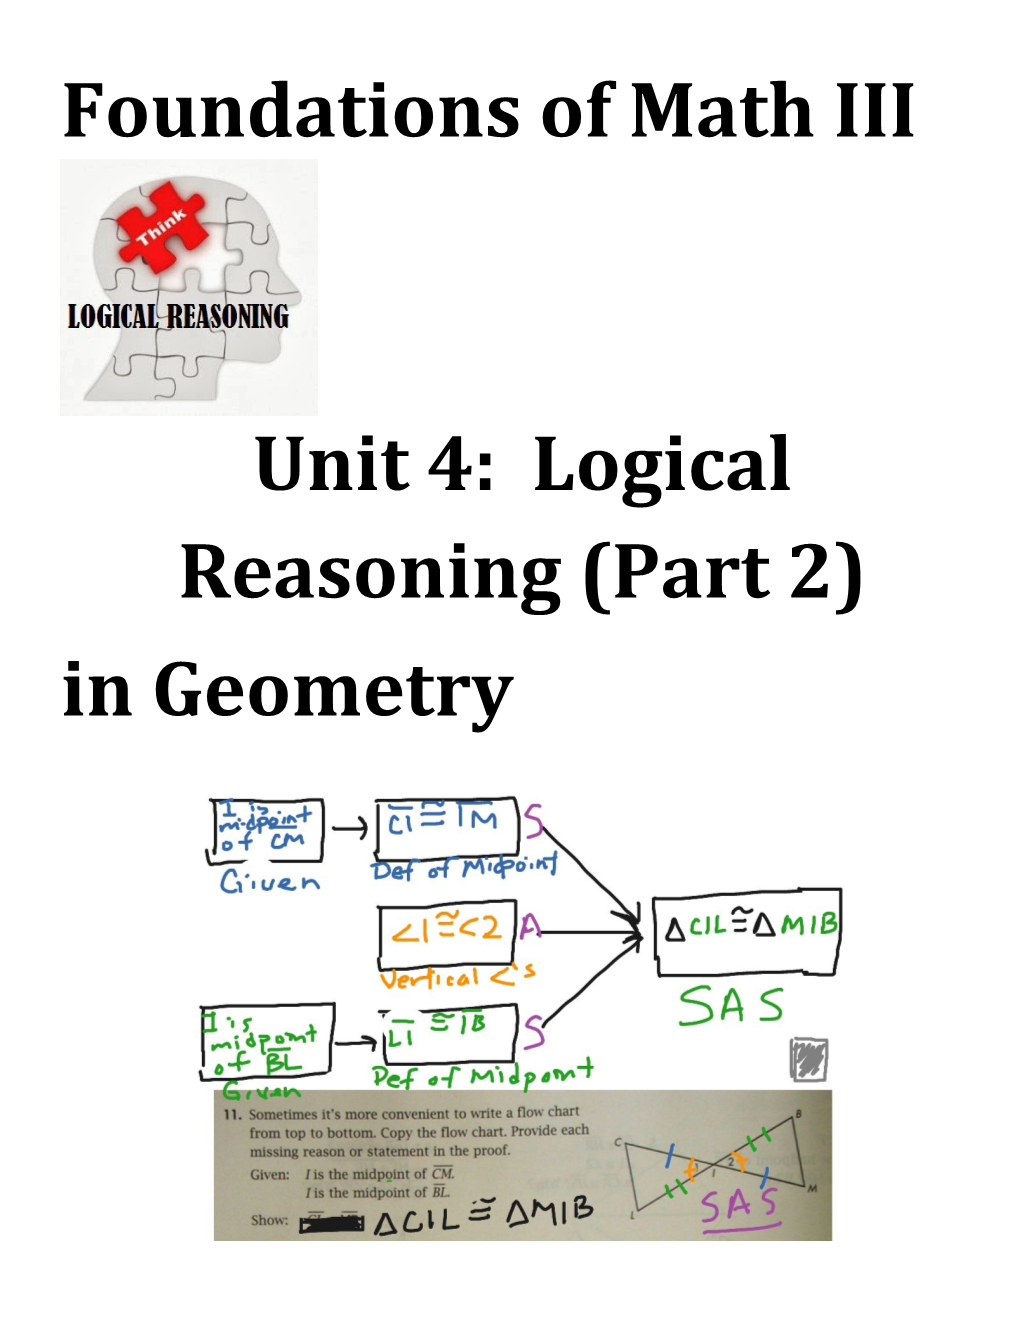 Unit 4: Logical Reasoning (Part 2)